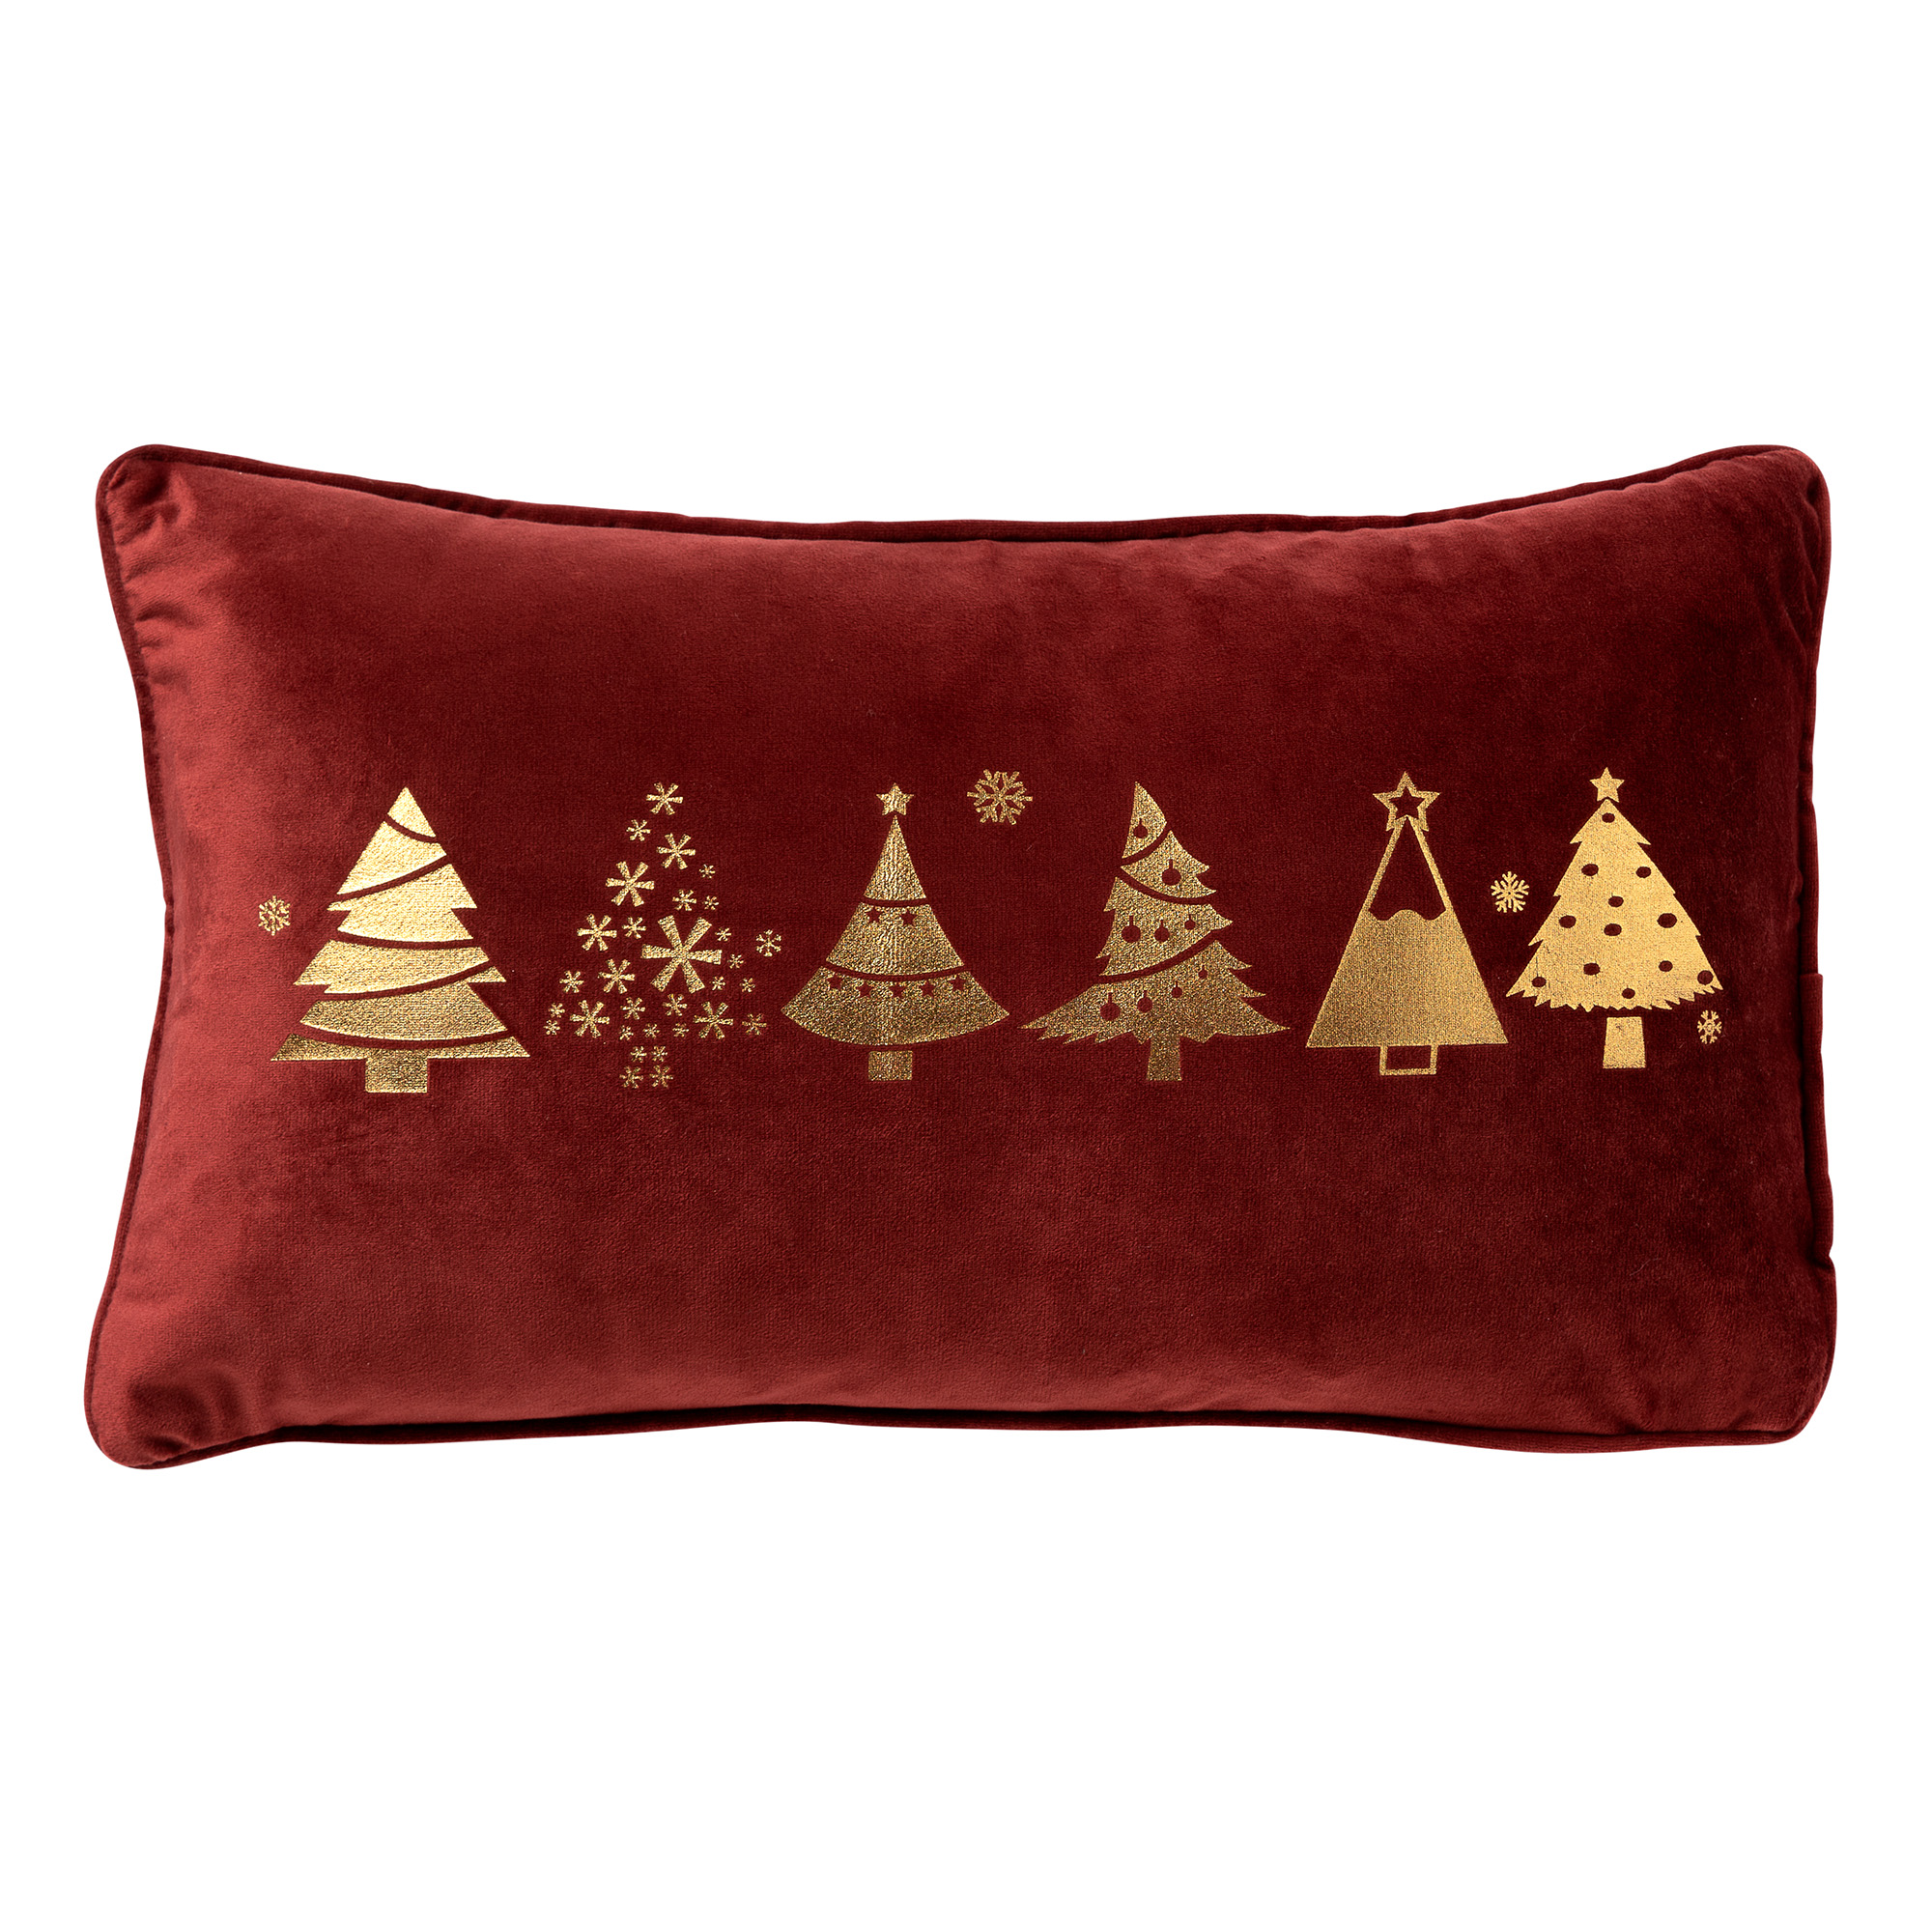 TREES - Cushion cover 30x50 cm - Red - Christmas decoration - velvet